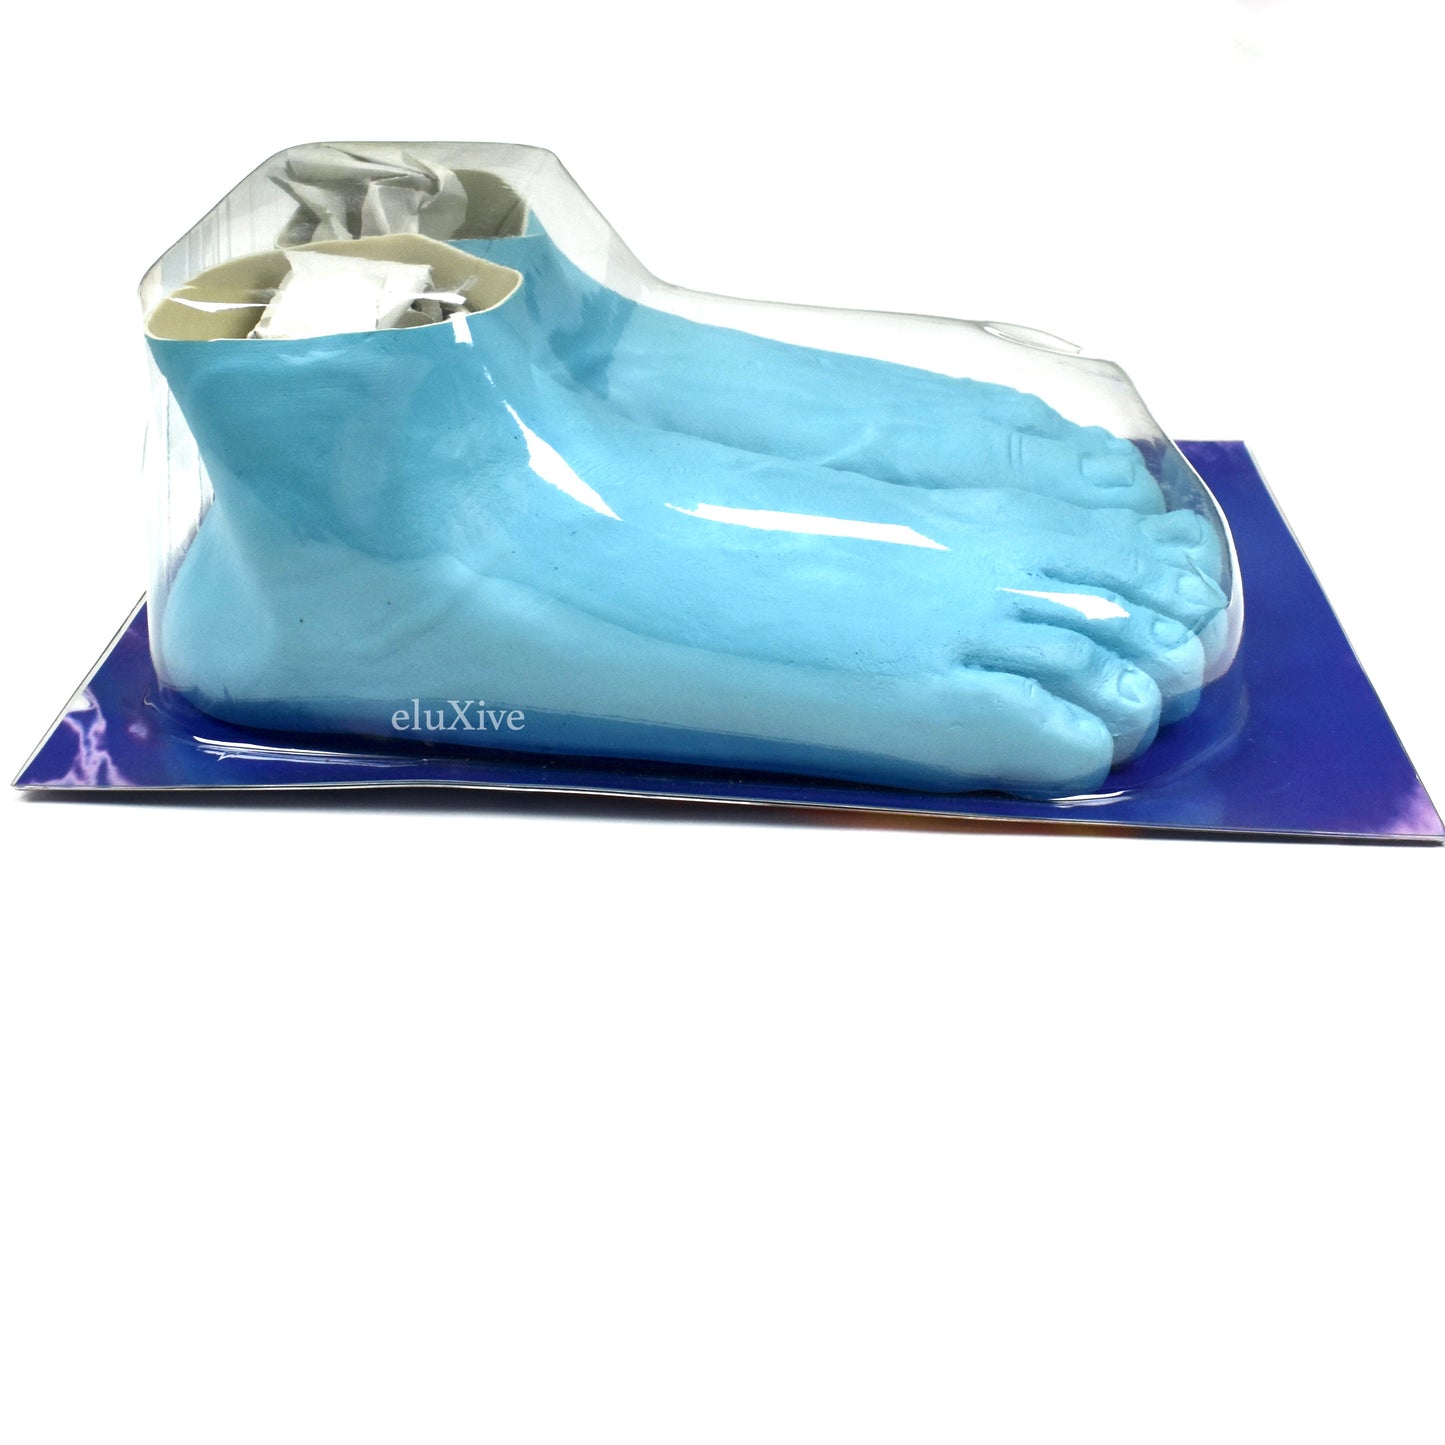 Imran Potato - Caveman Foot Slippers 'Smurf' (Blue)